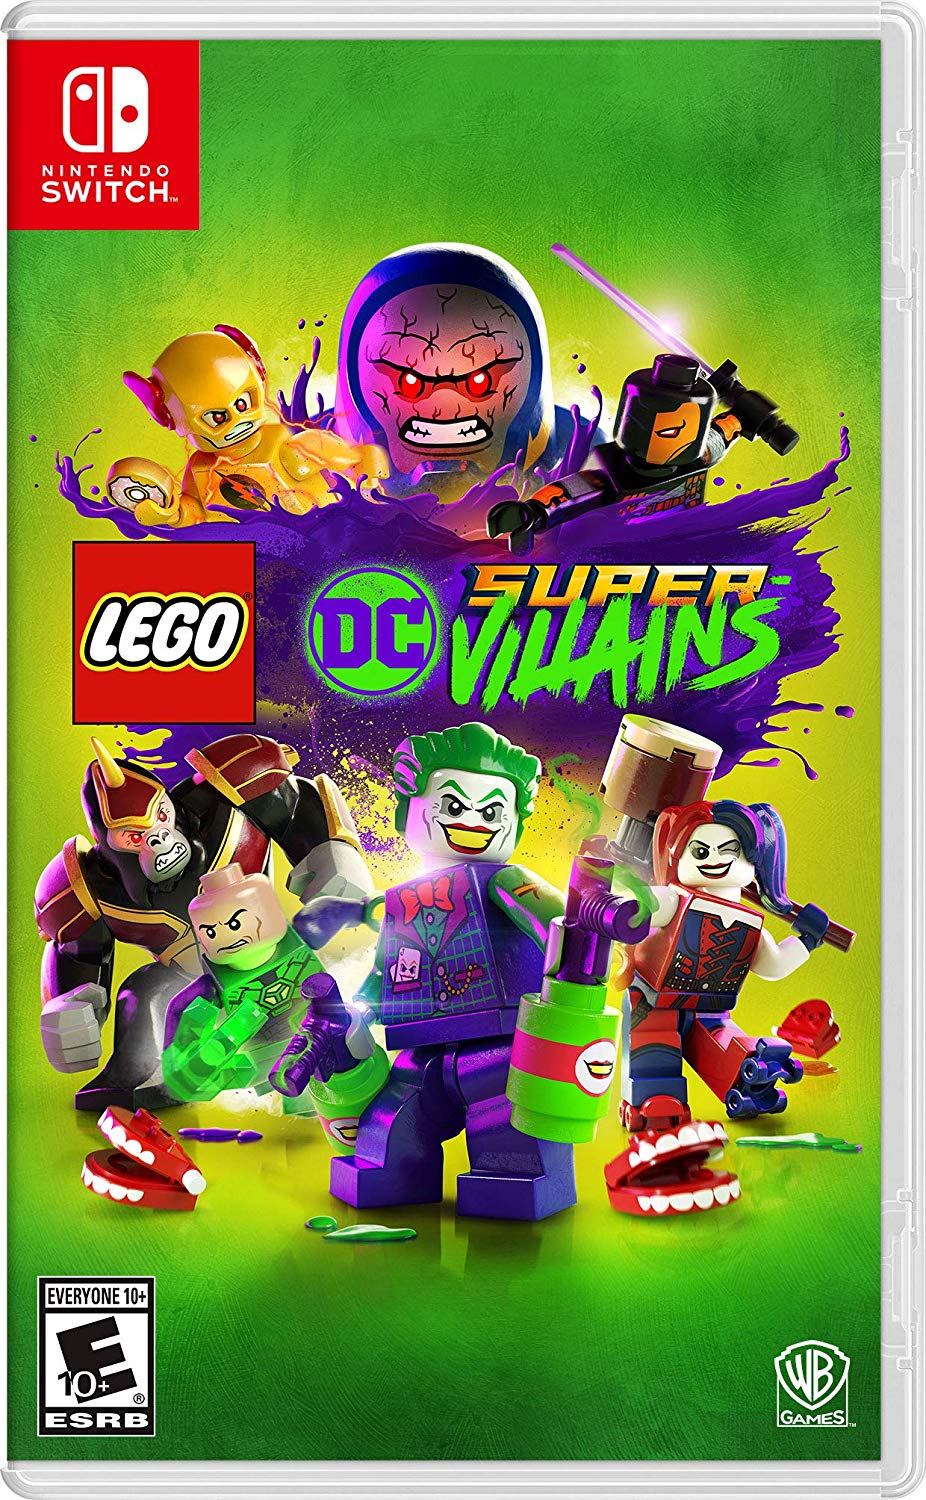 LEGO DC Super Villains box art for Nintendo Switch